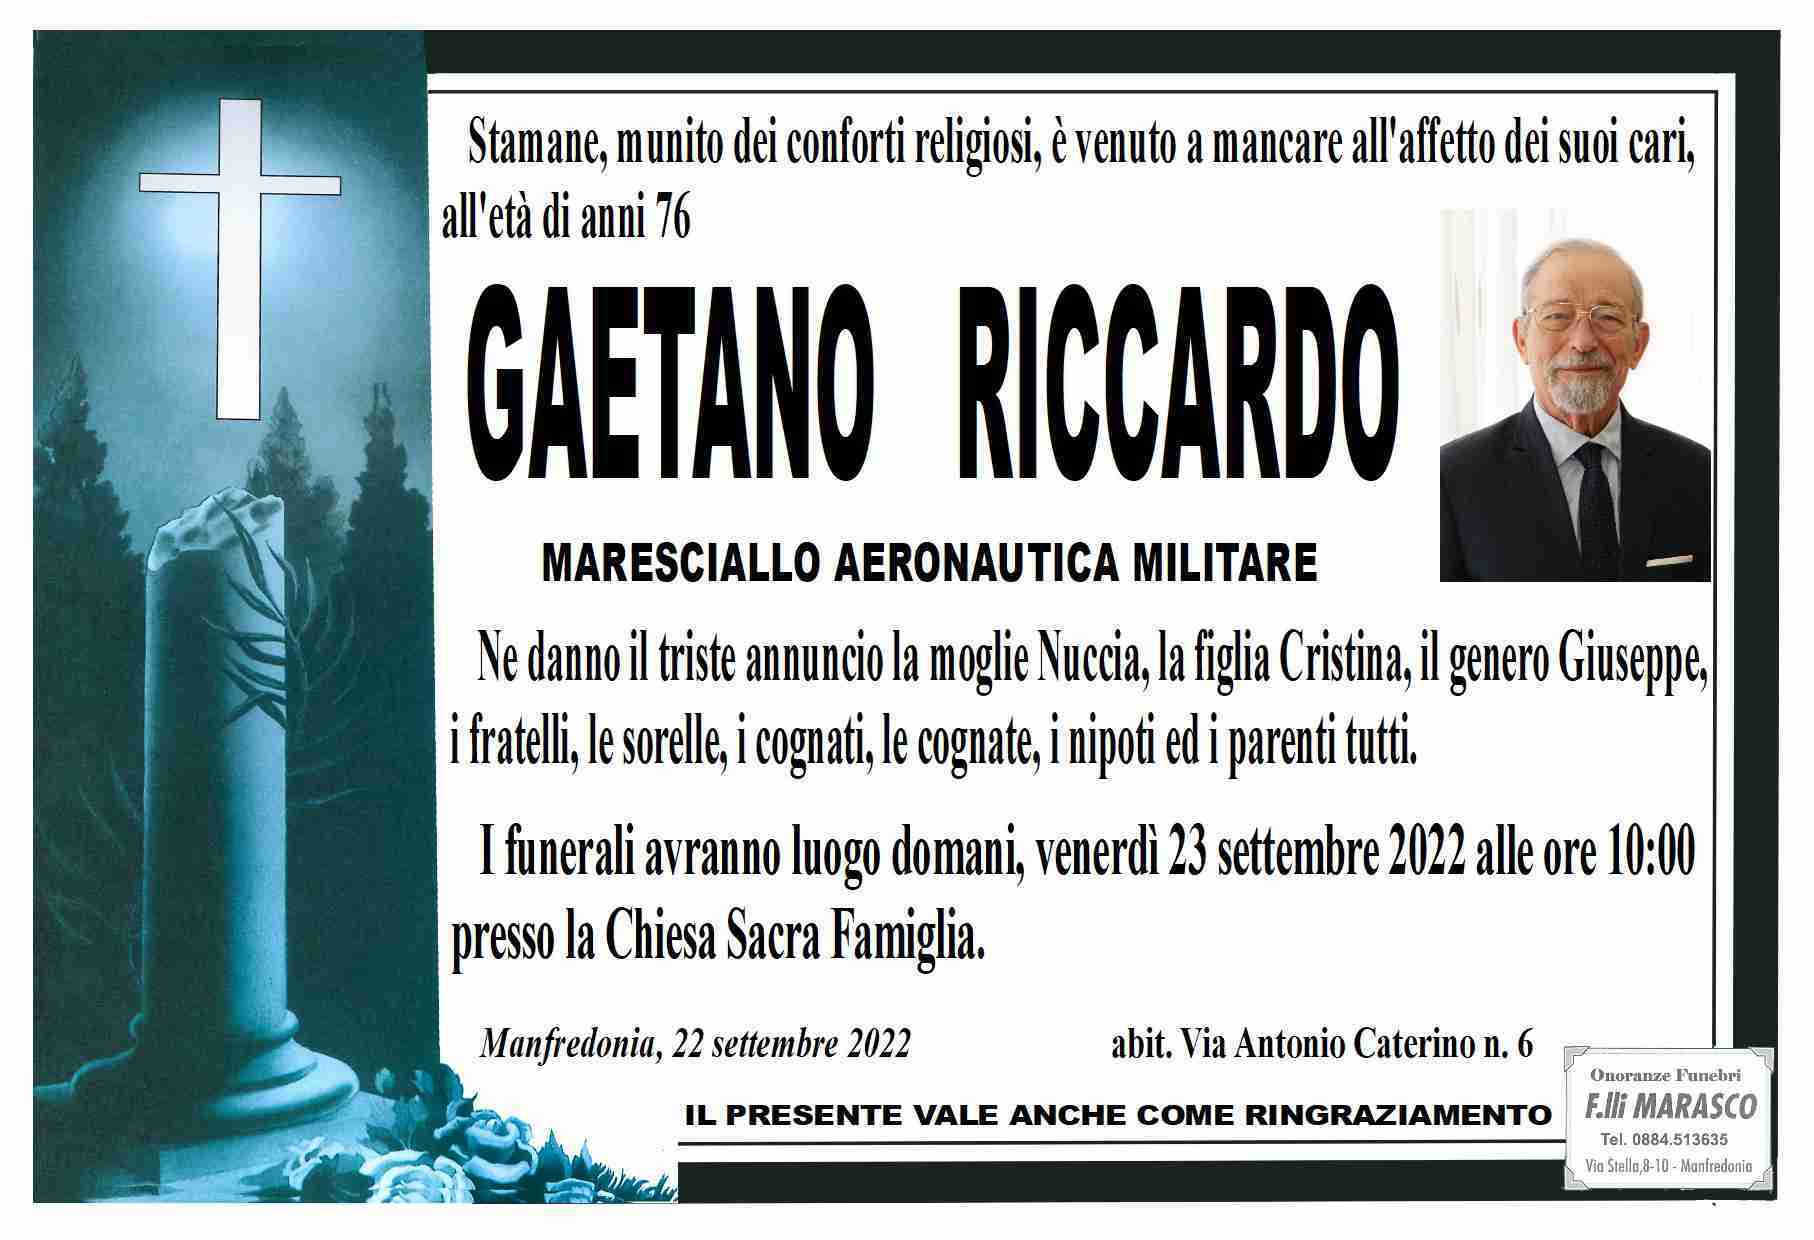 Gaetano Riccardo